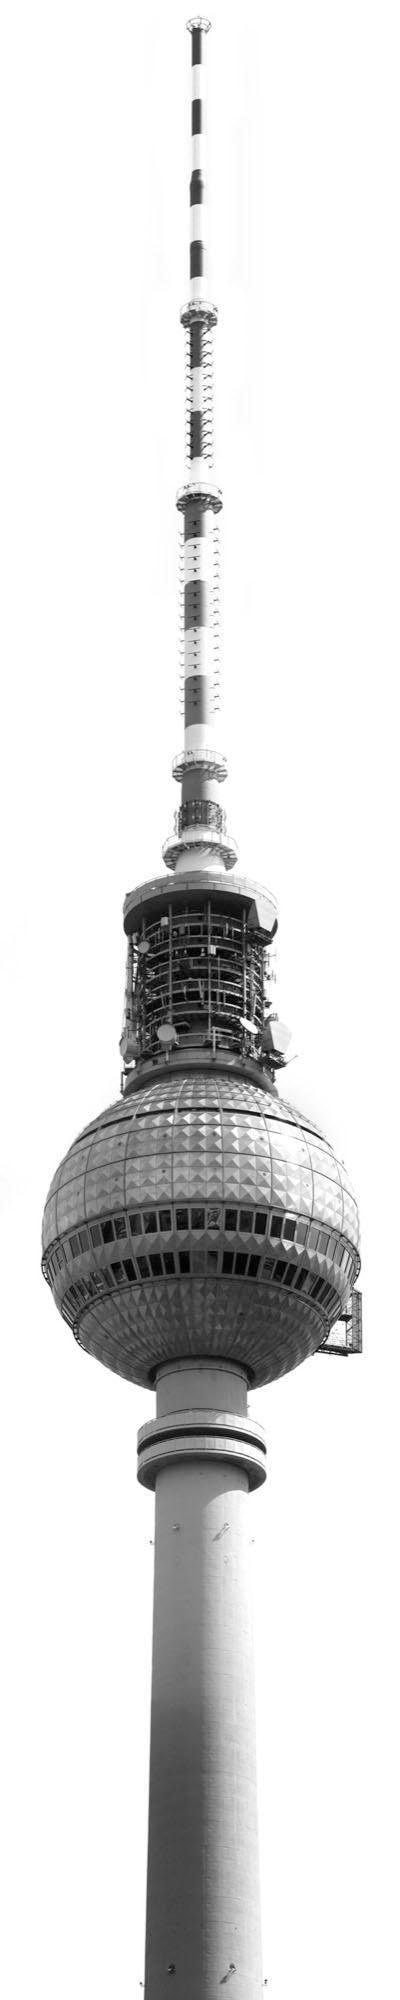 Komar Vliestapete »Fernsehturm«, 50x250 cm (Breite x Höhe)